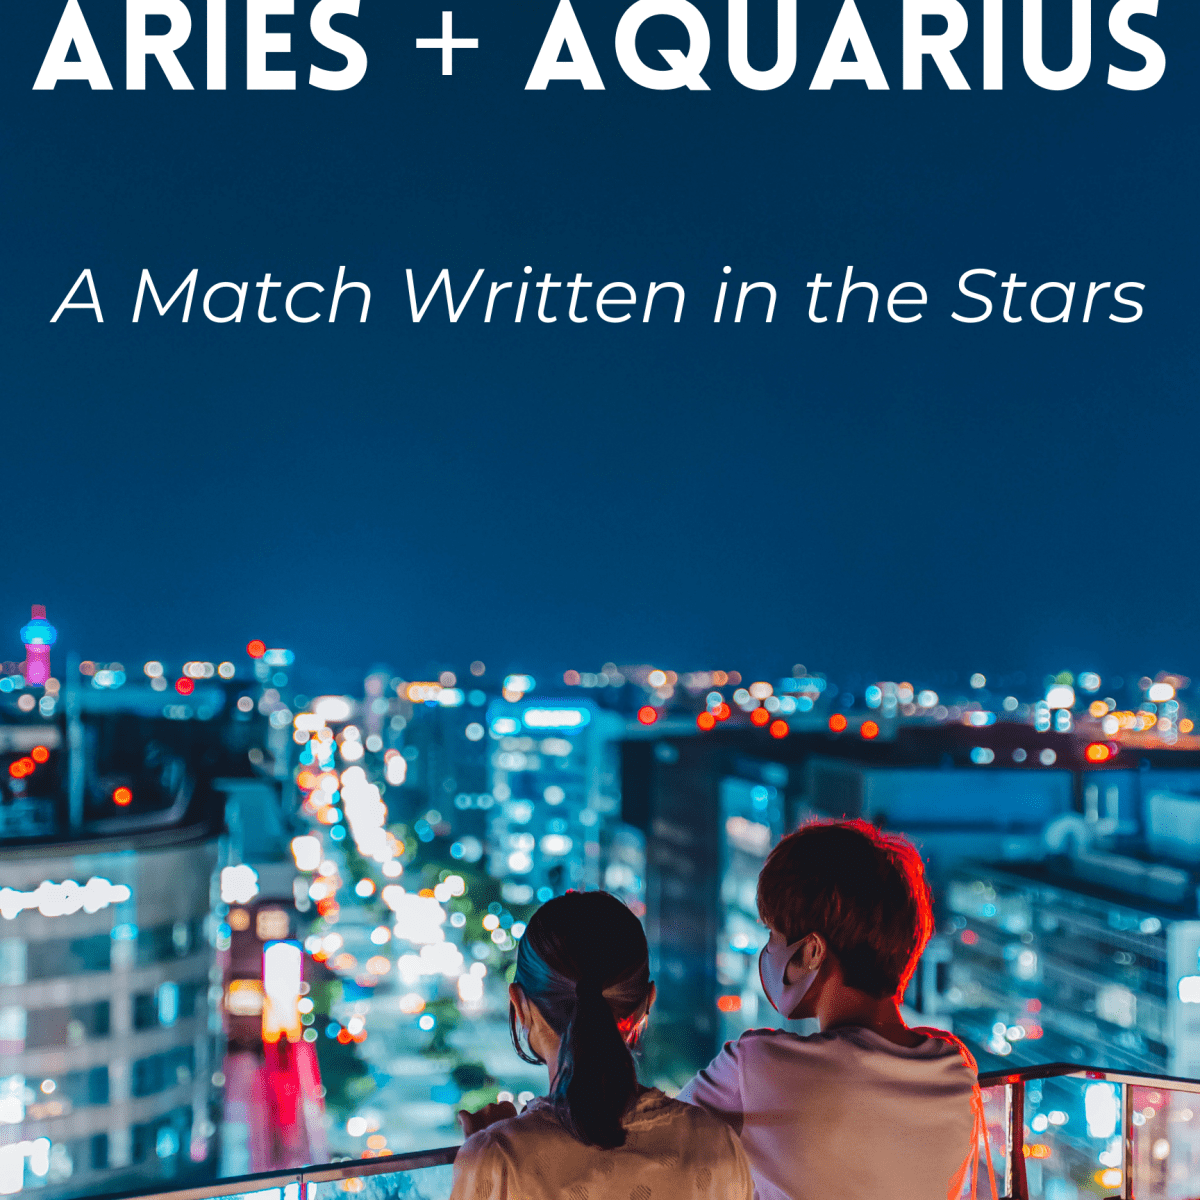 And be aries can soulmates? aquarius Aries Aquarius